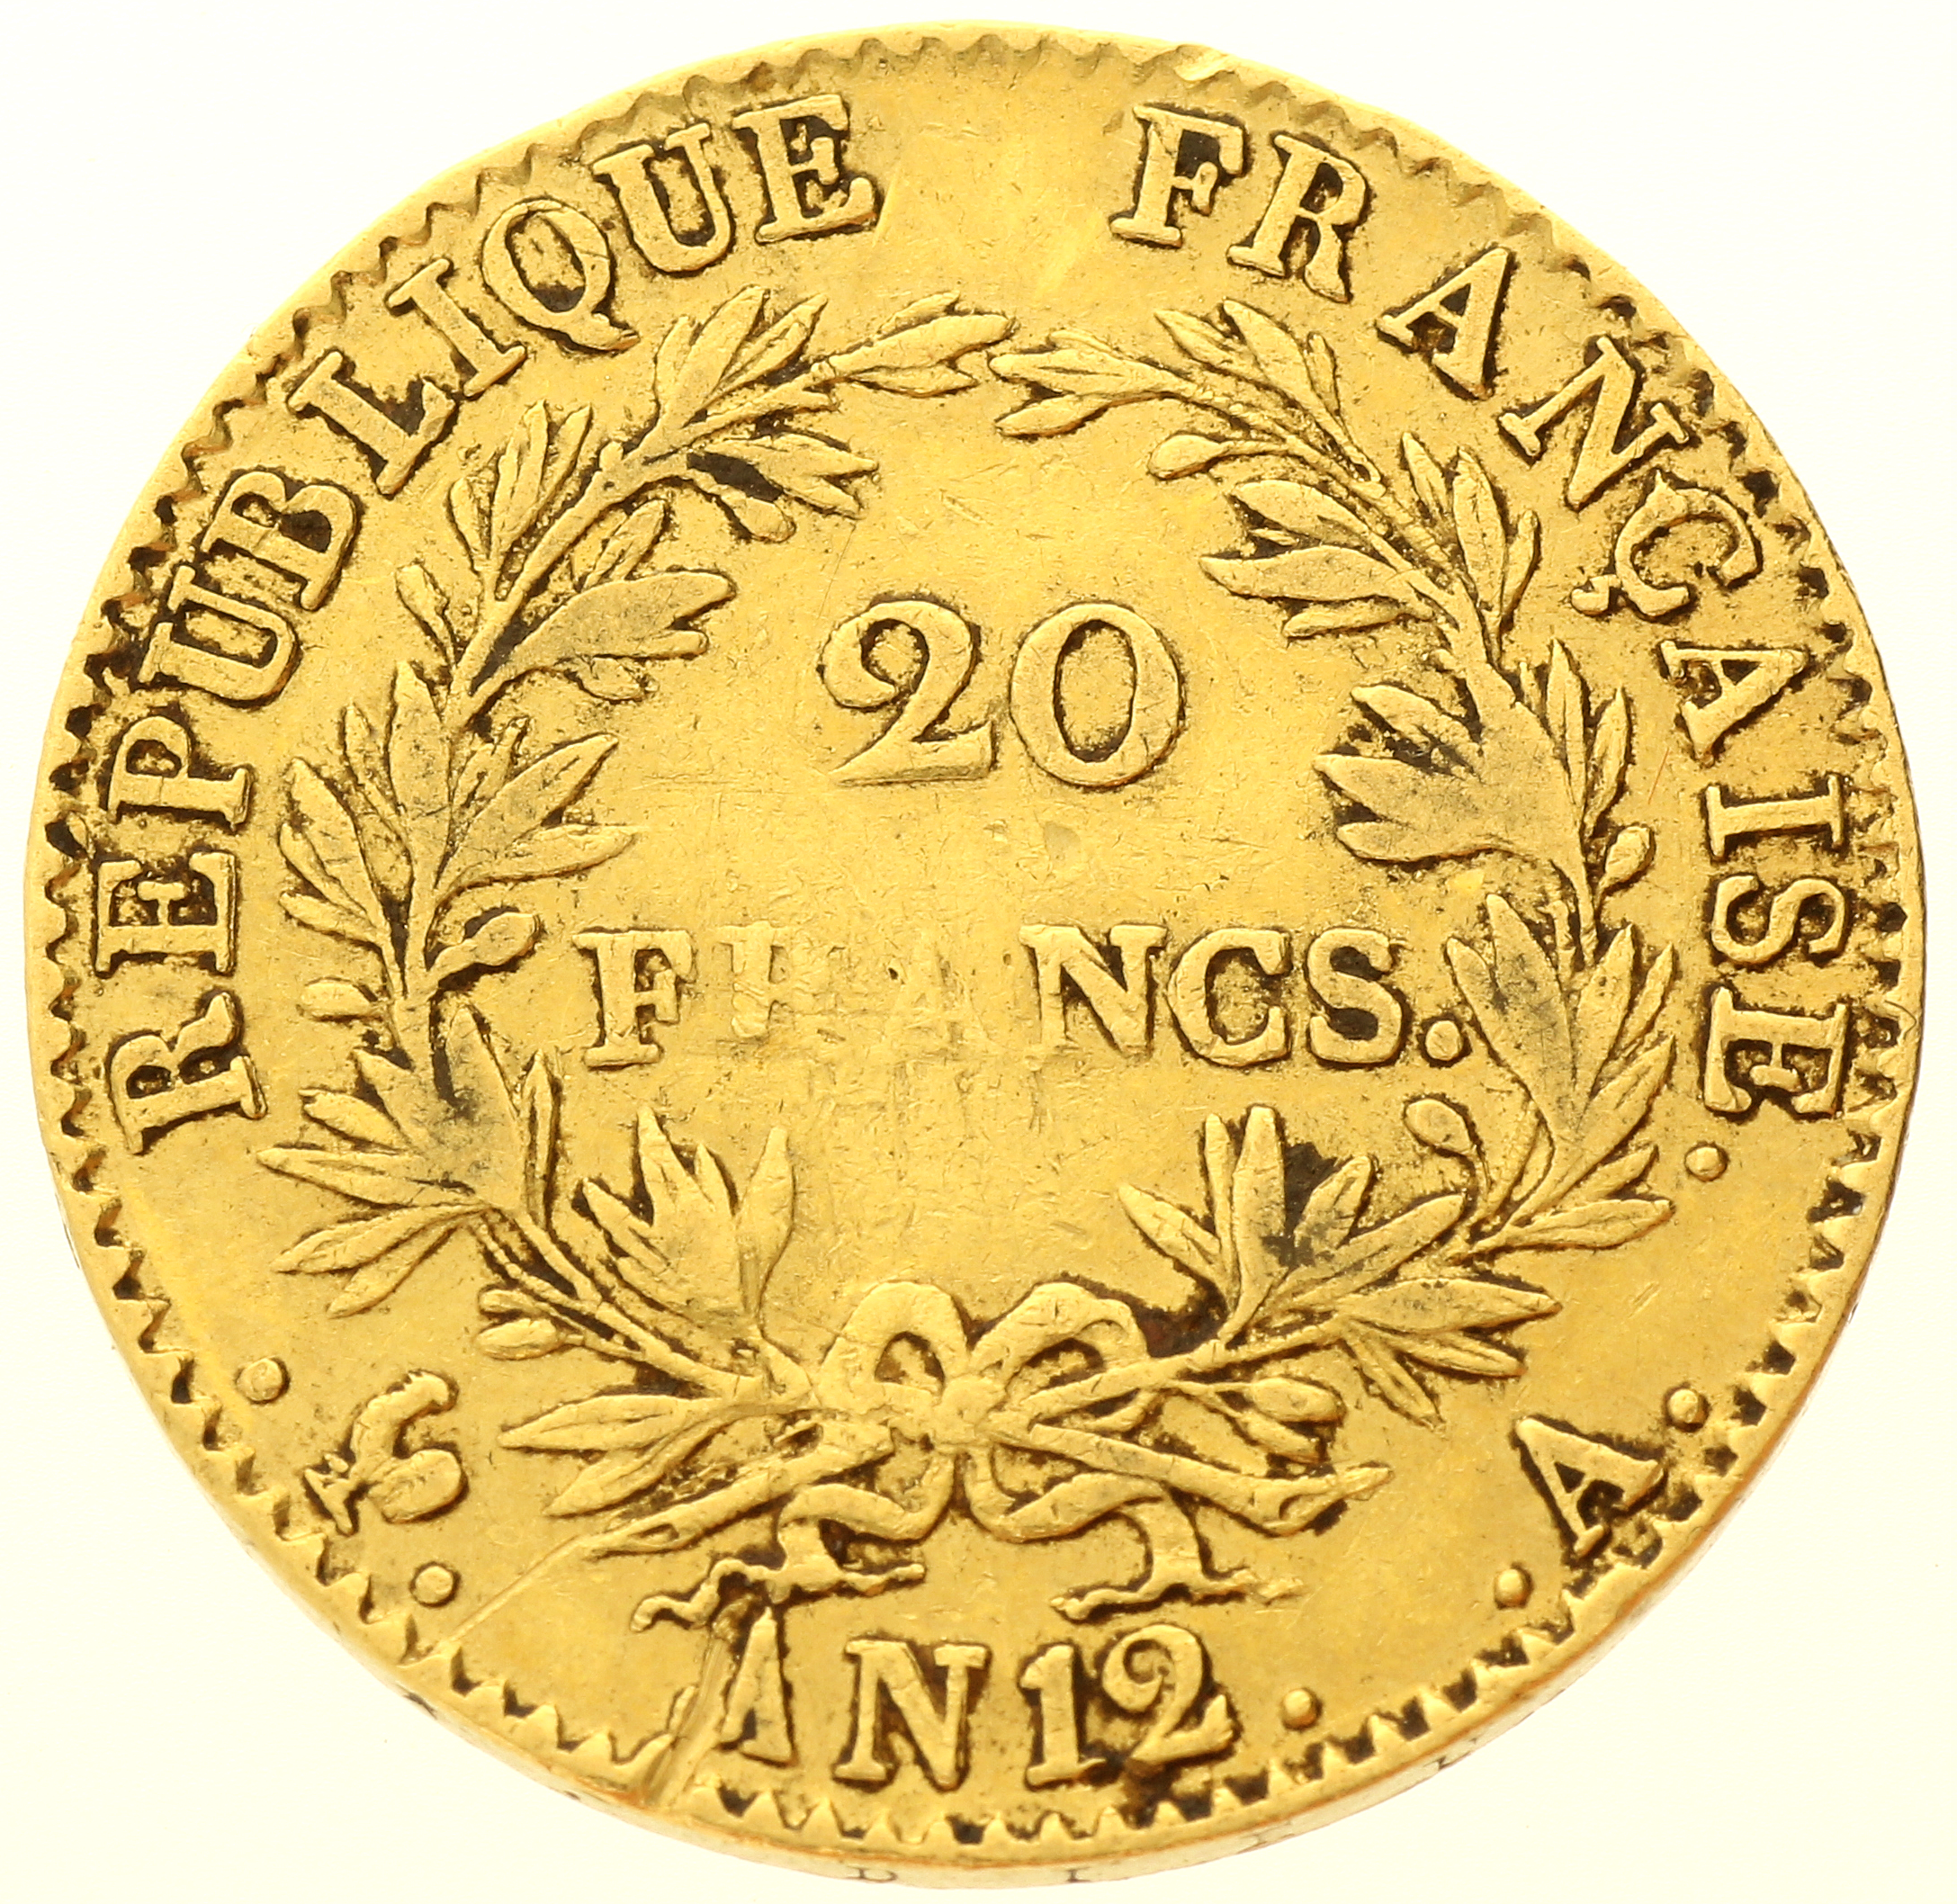 France - 20 francs - An 12 (1803) - Napoleon I 